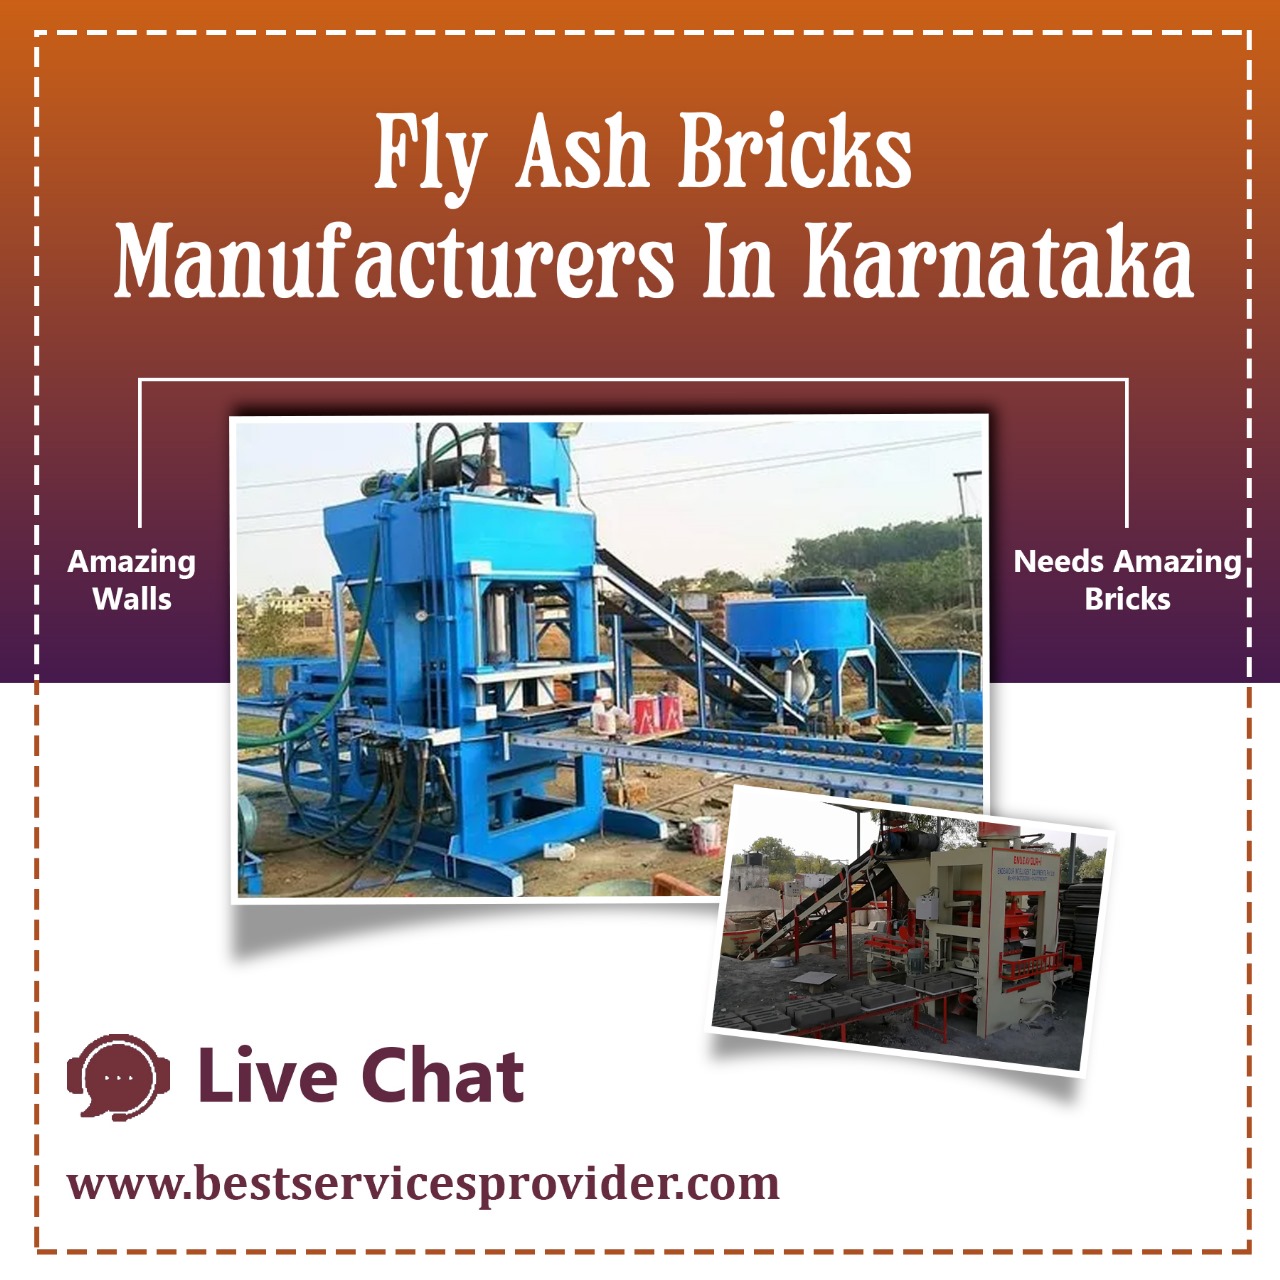 Fly Ash Bricks Manufacturers In Karnataka